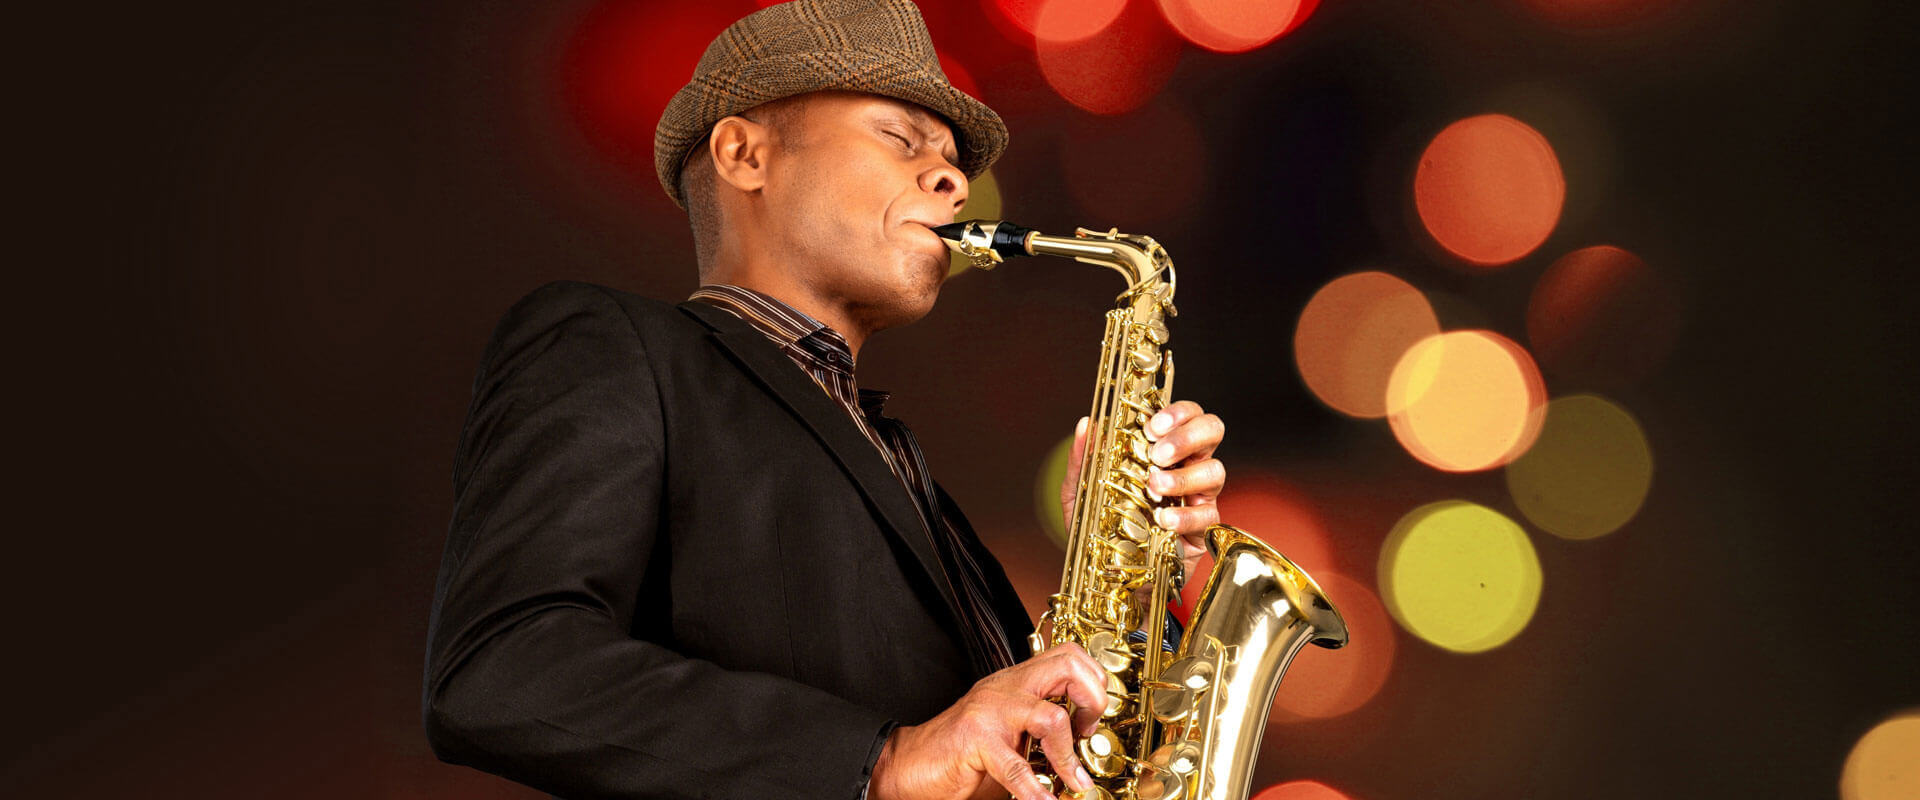 Saxophone Lessons Houston, TX